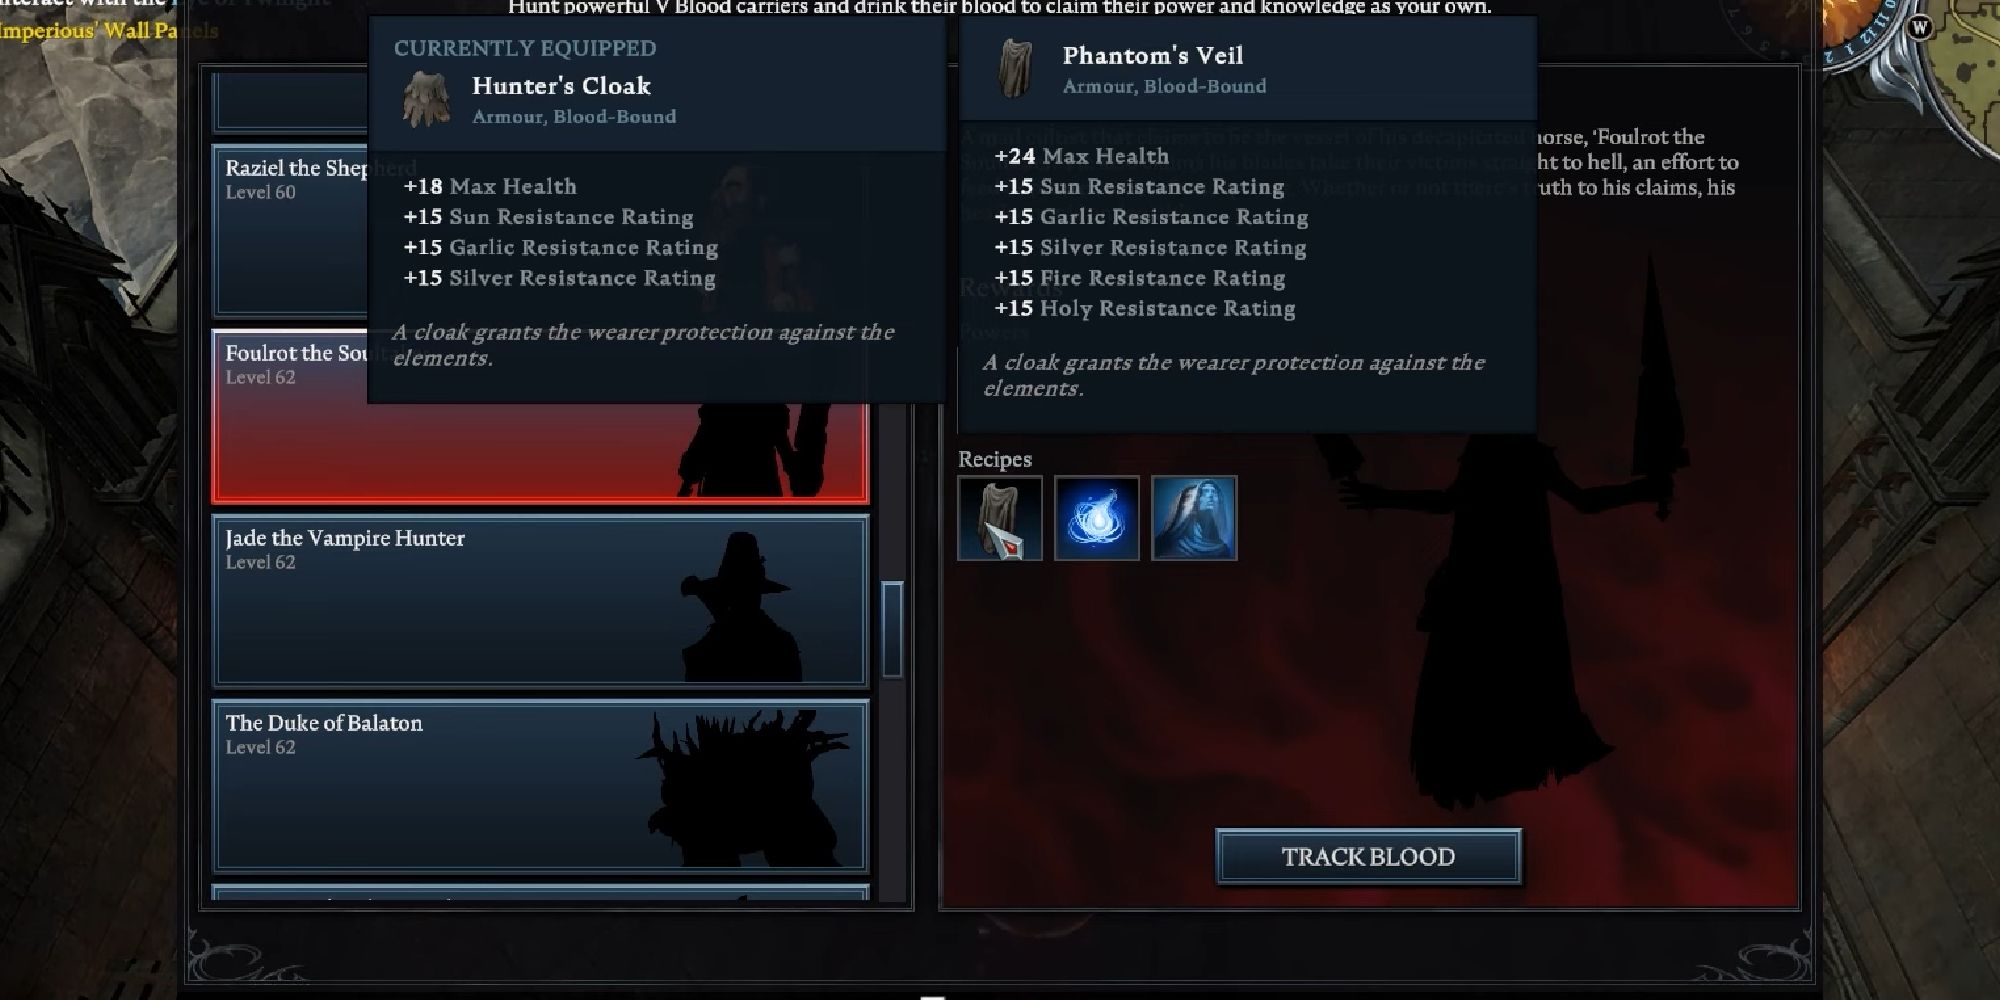 player highlighting veil recipe from foulrot the soultaker